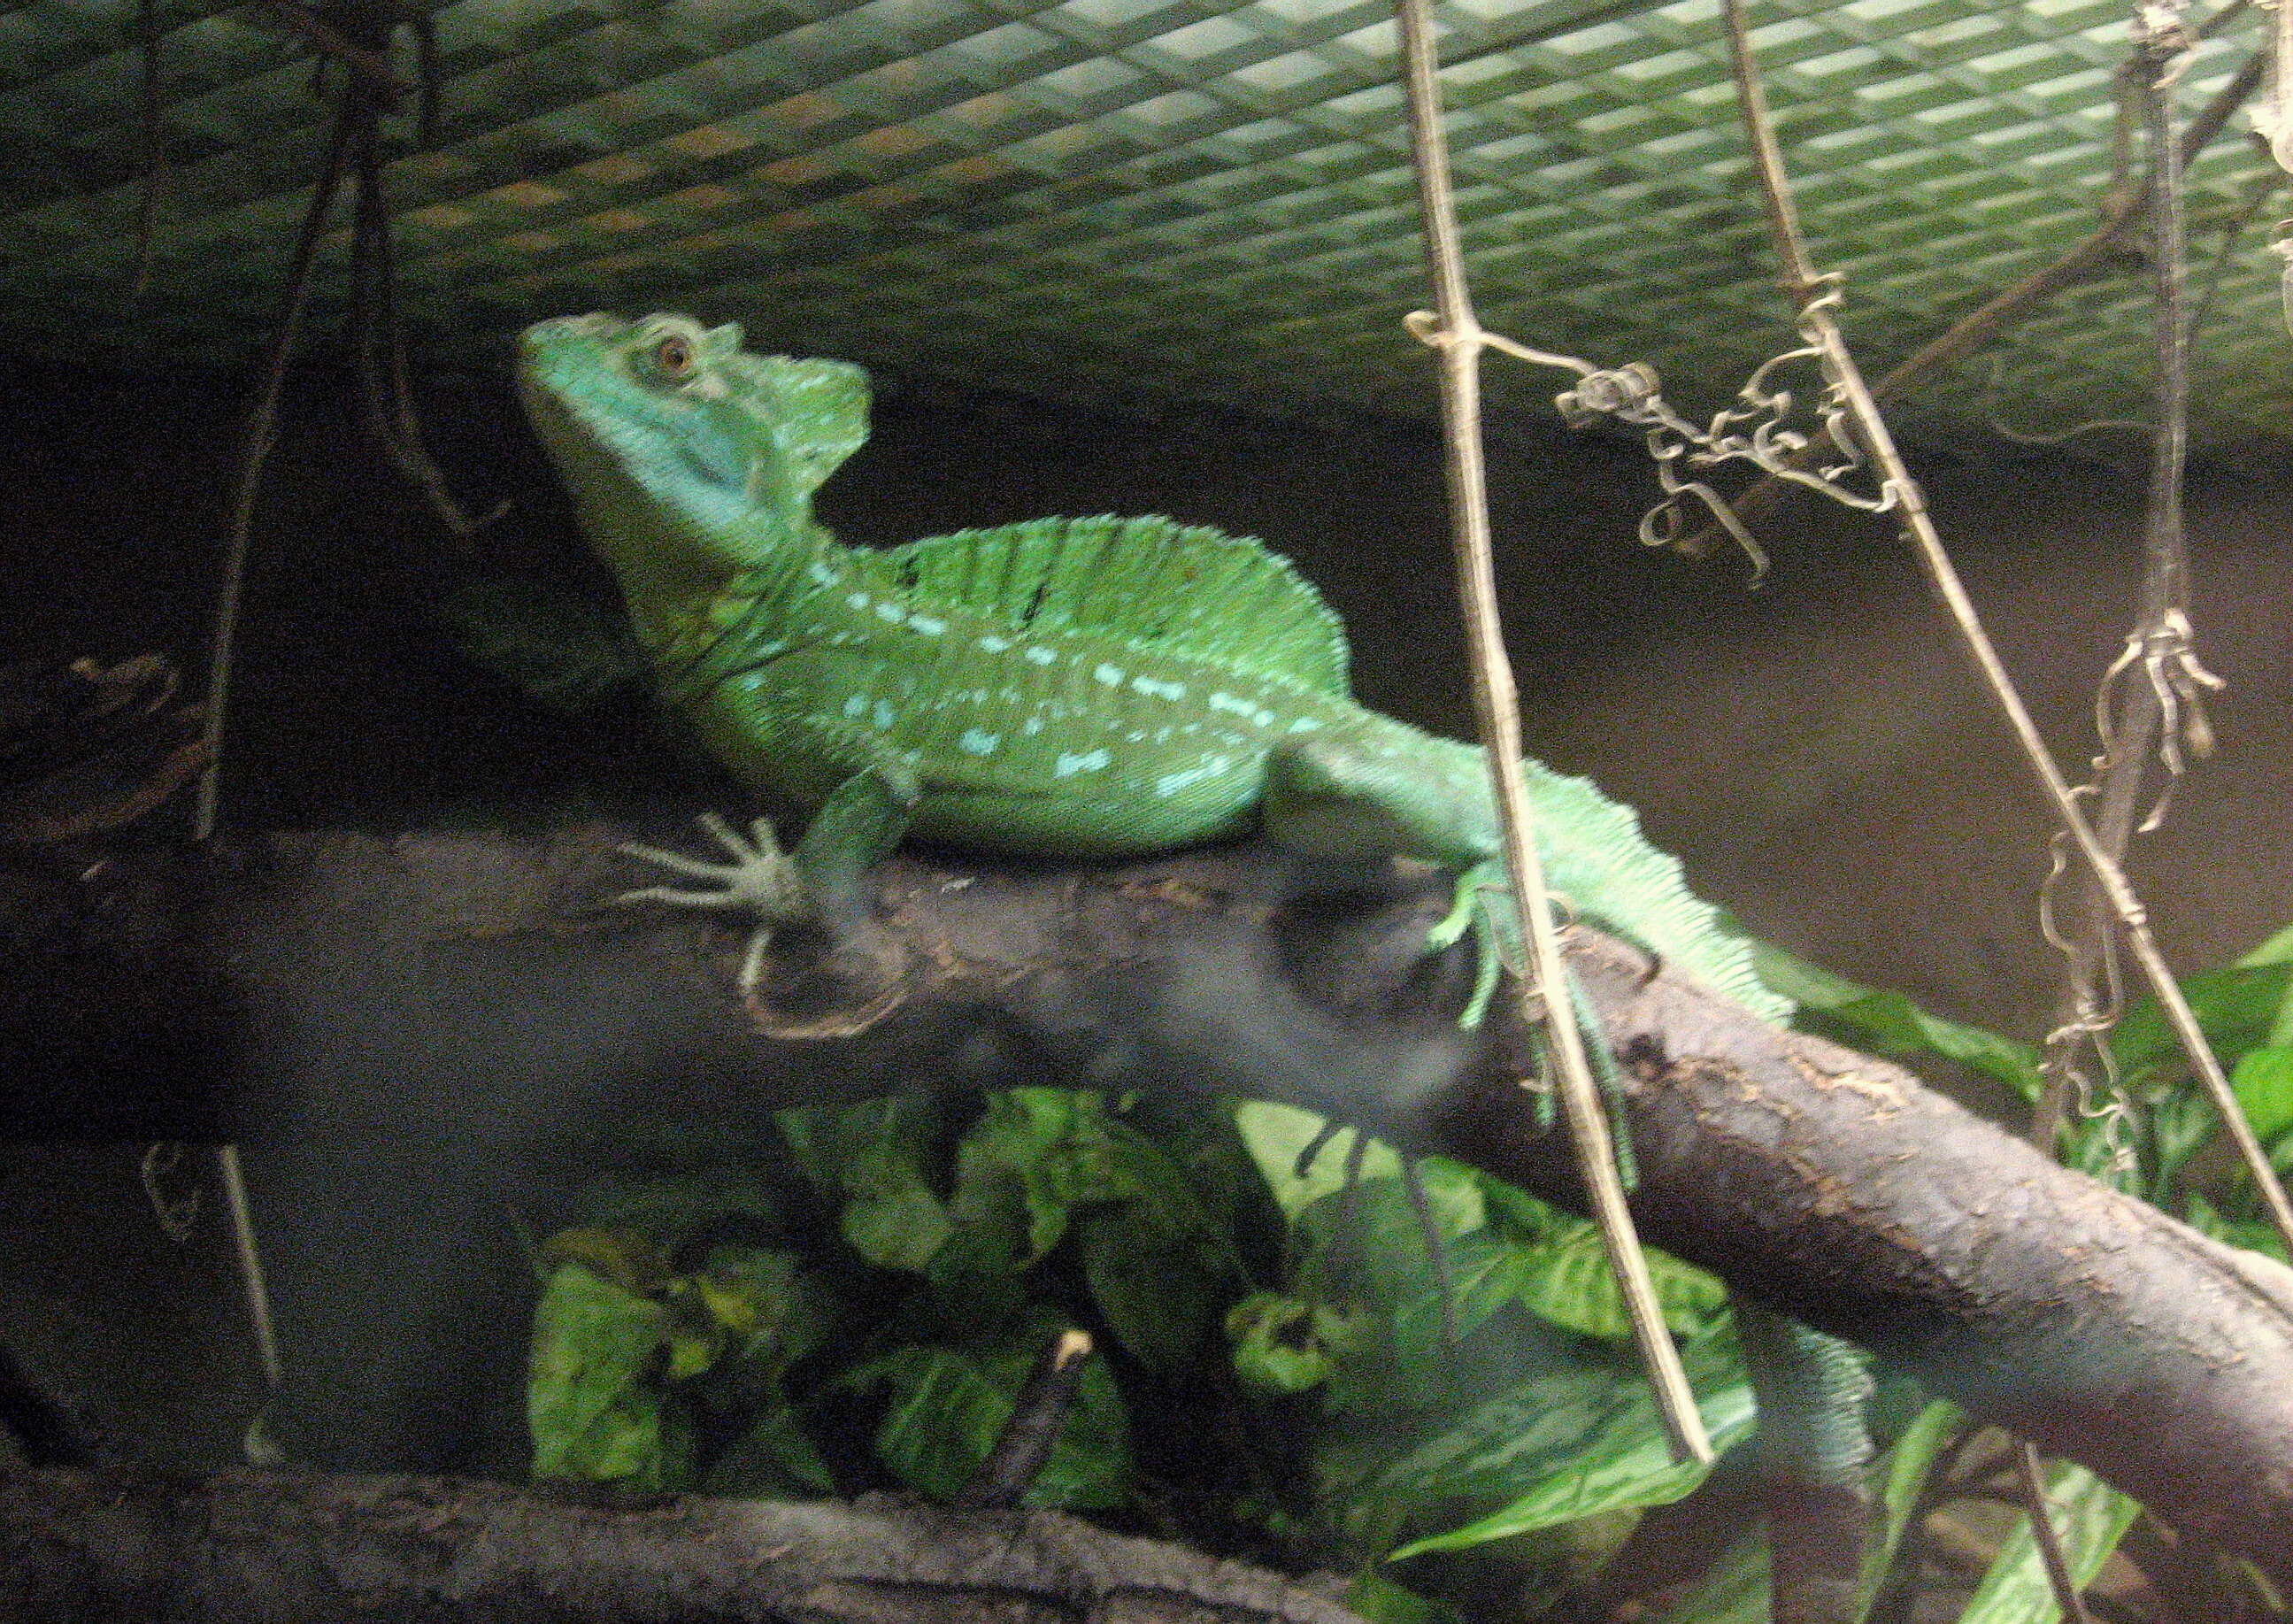 Image of Green Basilisk